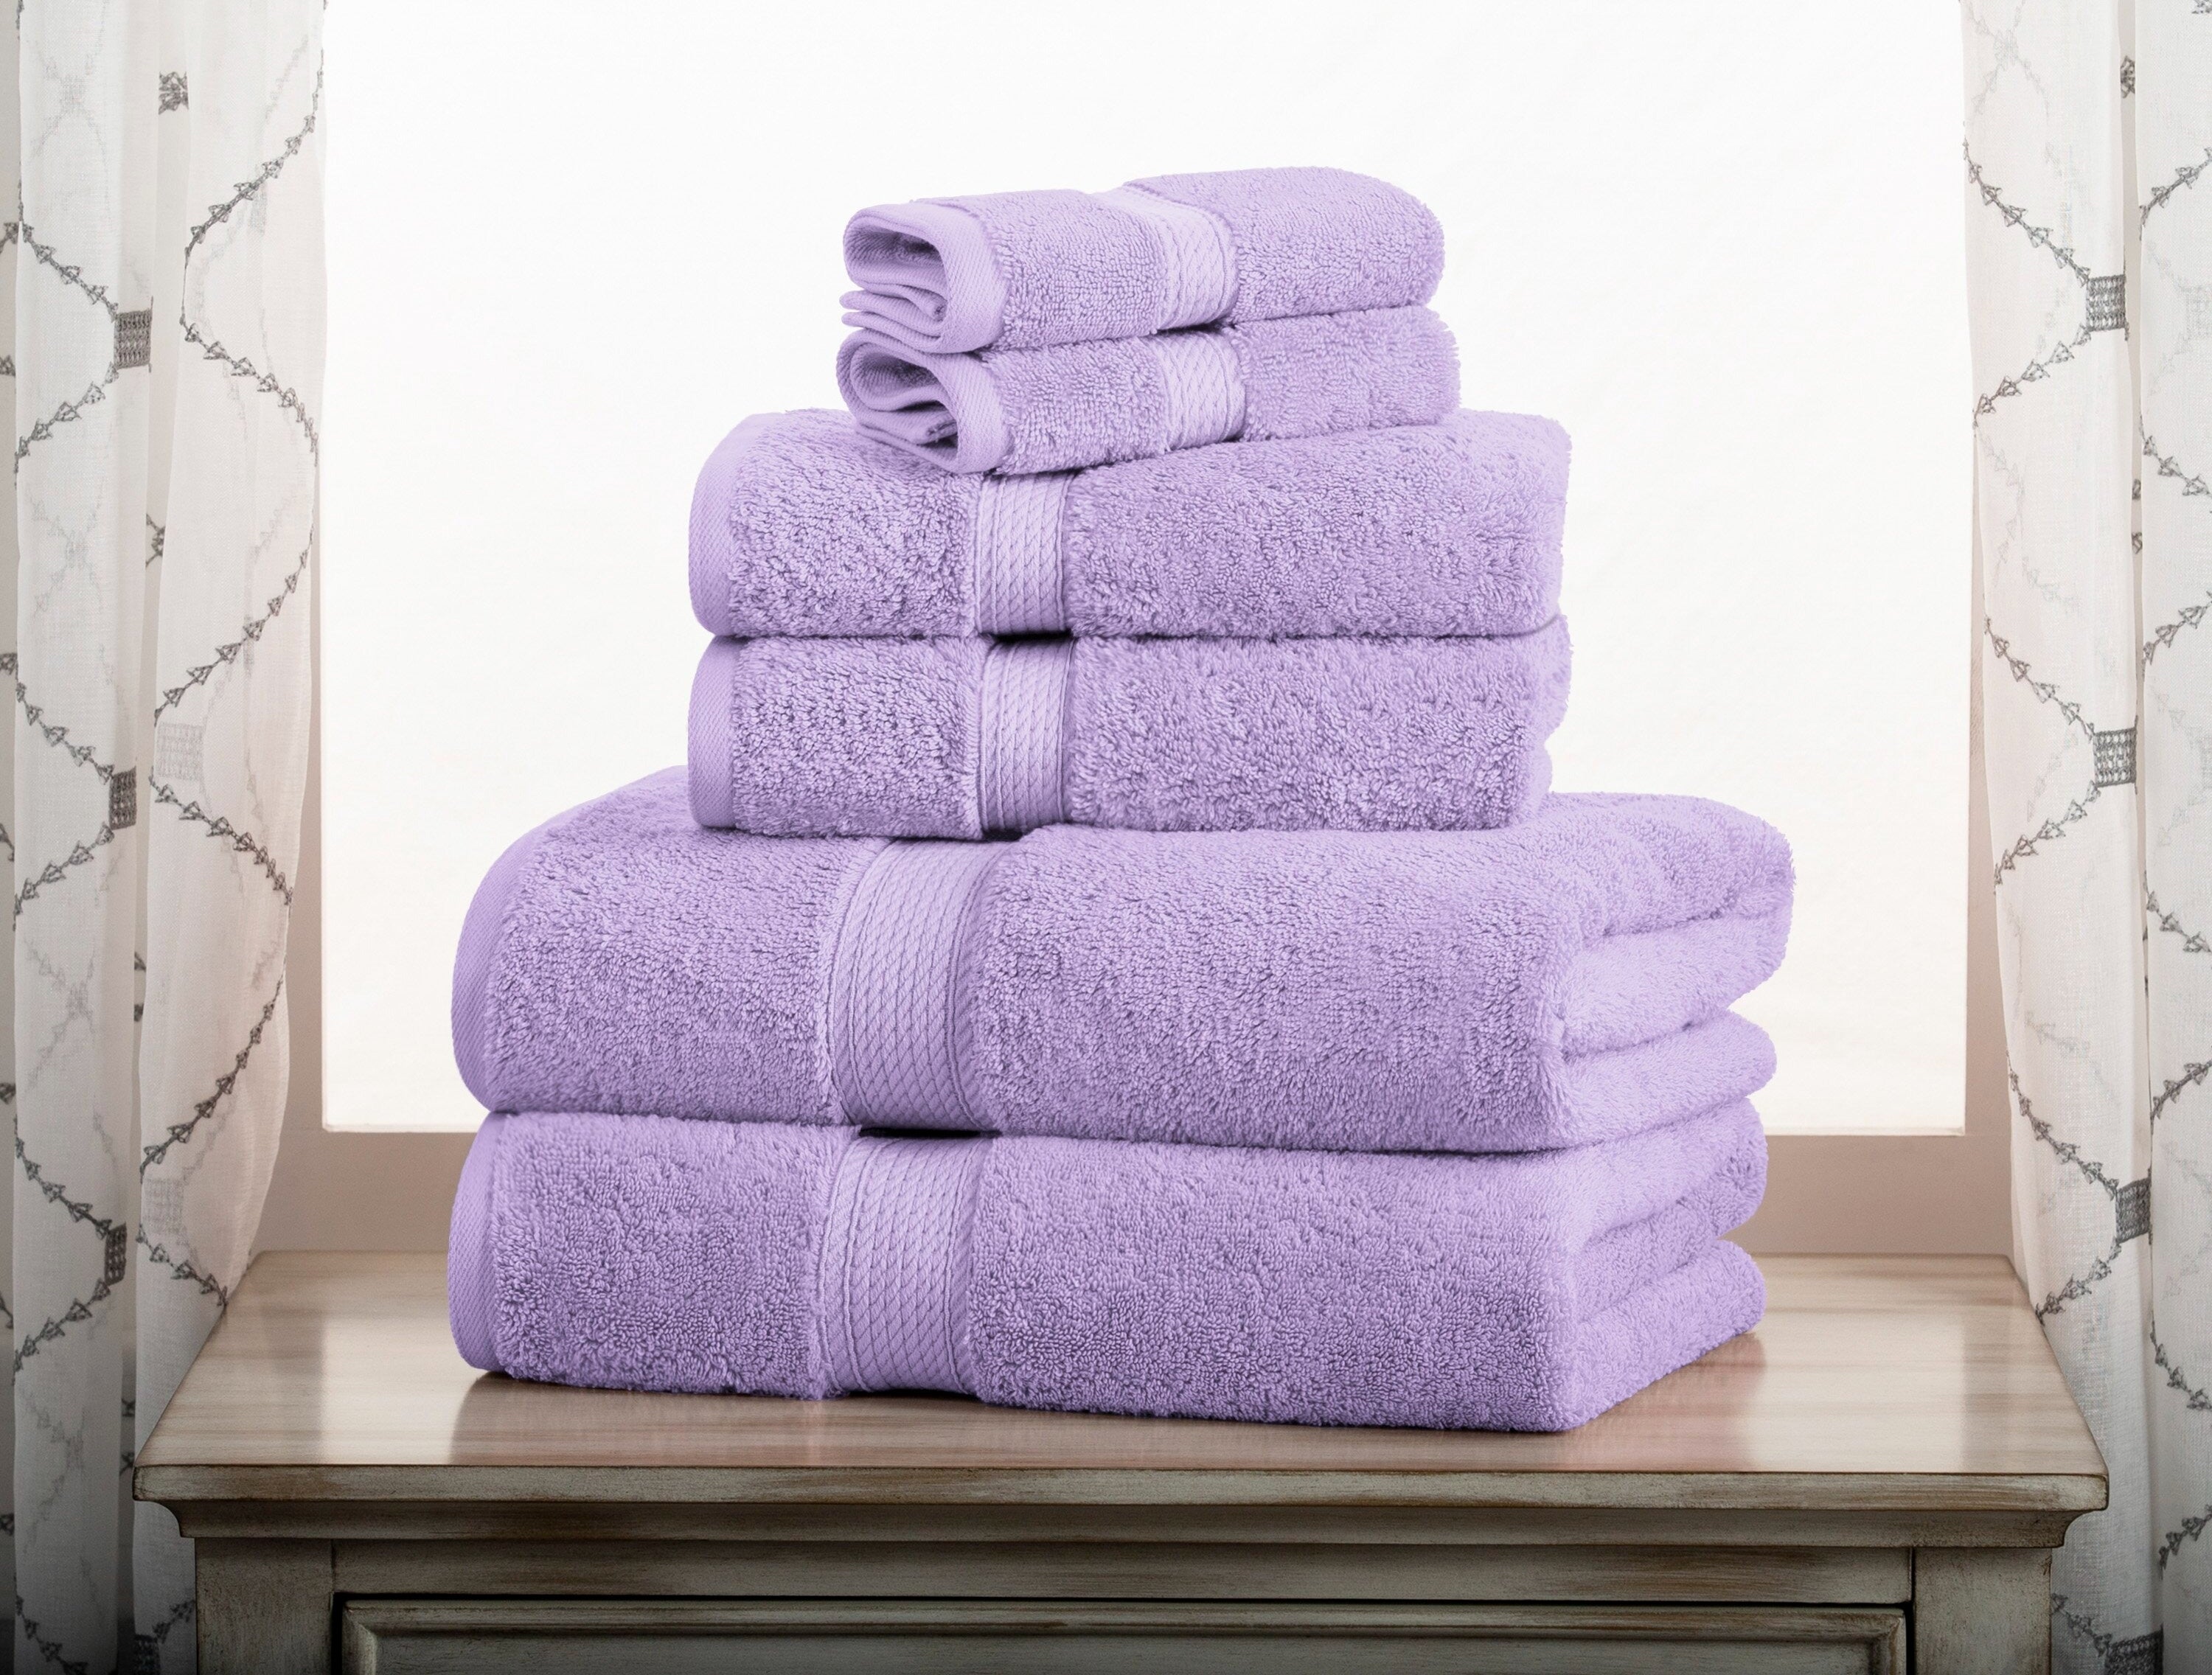 the purple towels